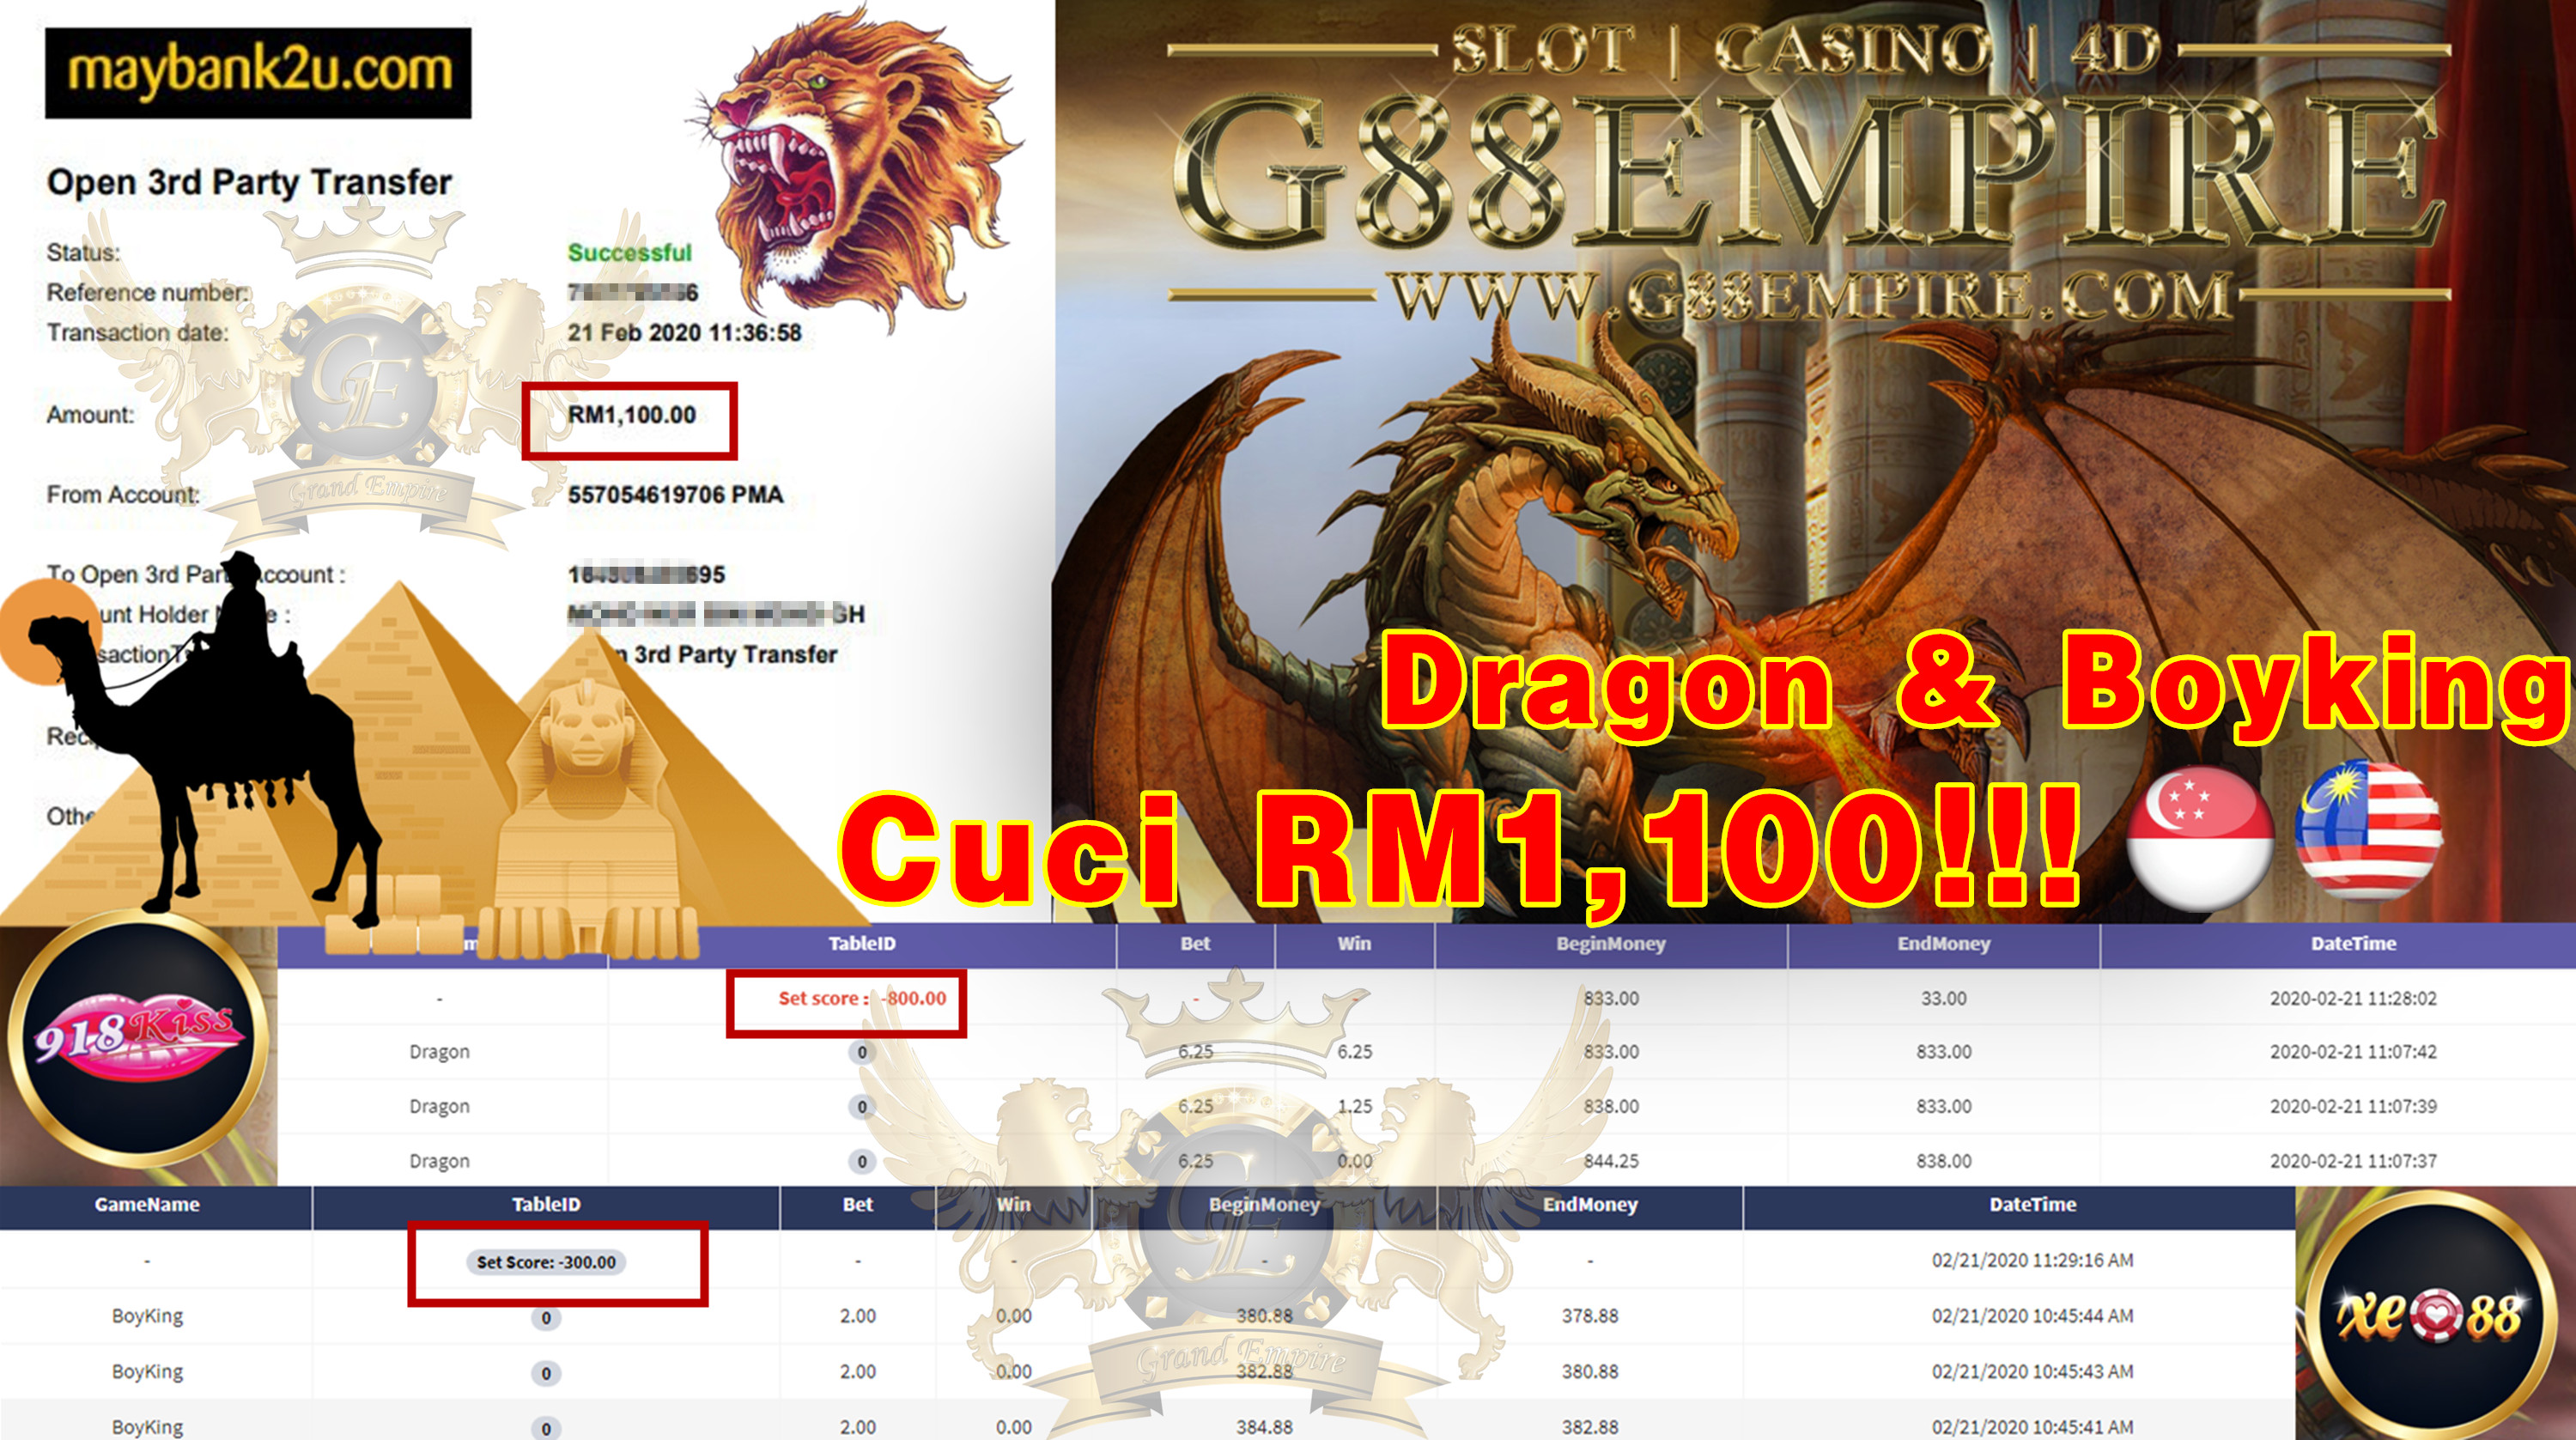 MEMBER MAIN DRAGON & BOYKING CUCI RM1,100!!!